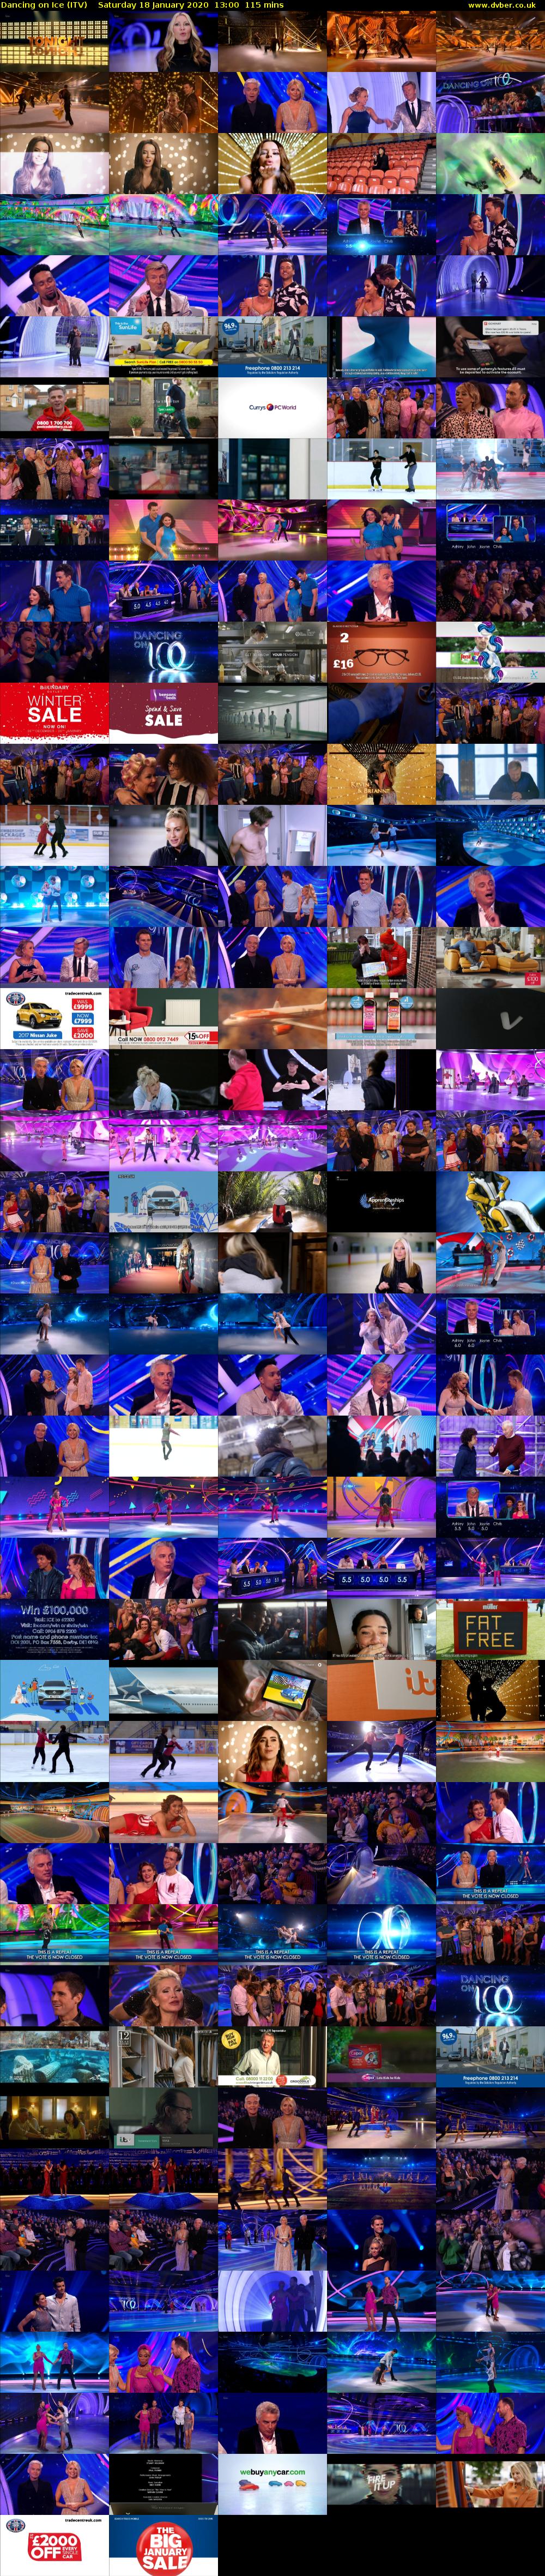 Dancing on Ice (ITV) Saturday 18 January 2020 13:00 - 14:55